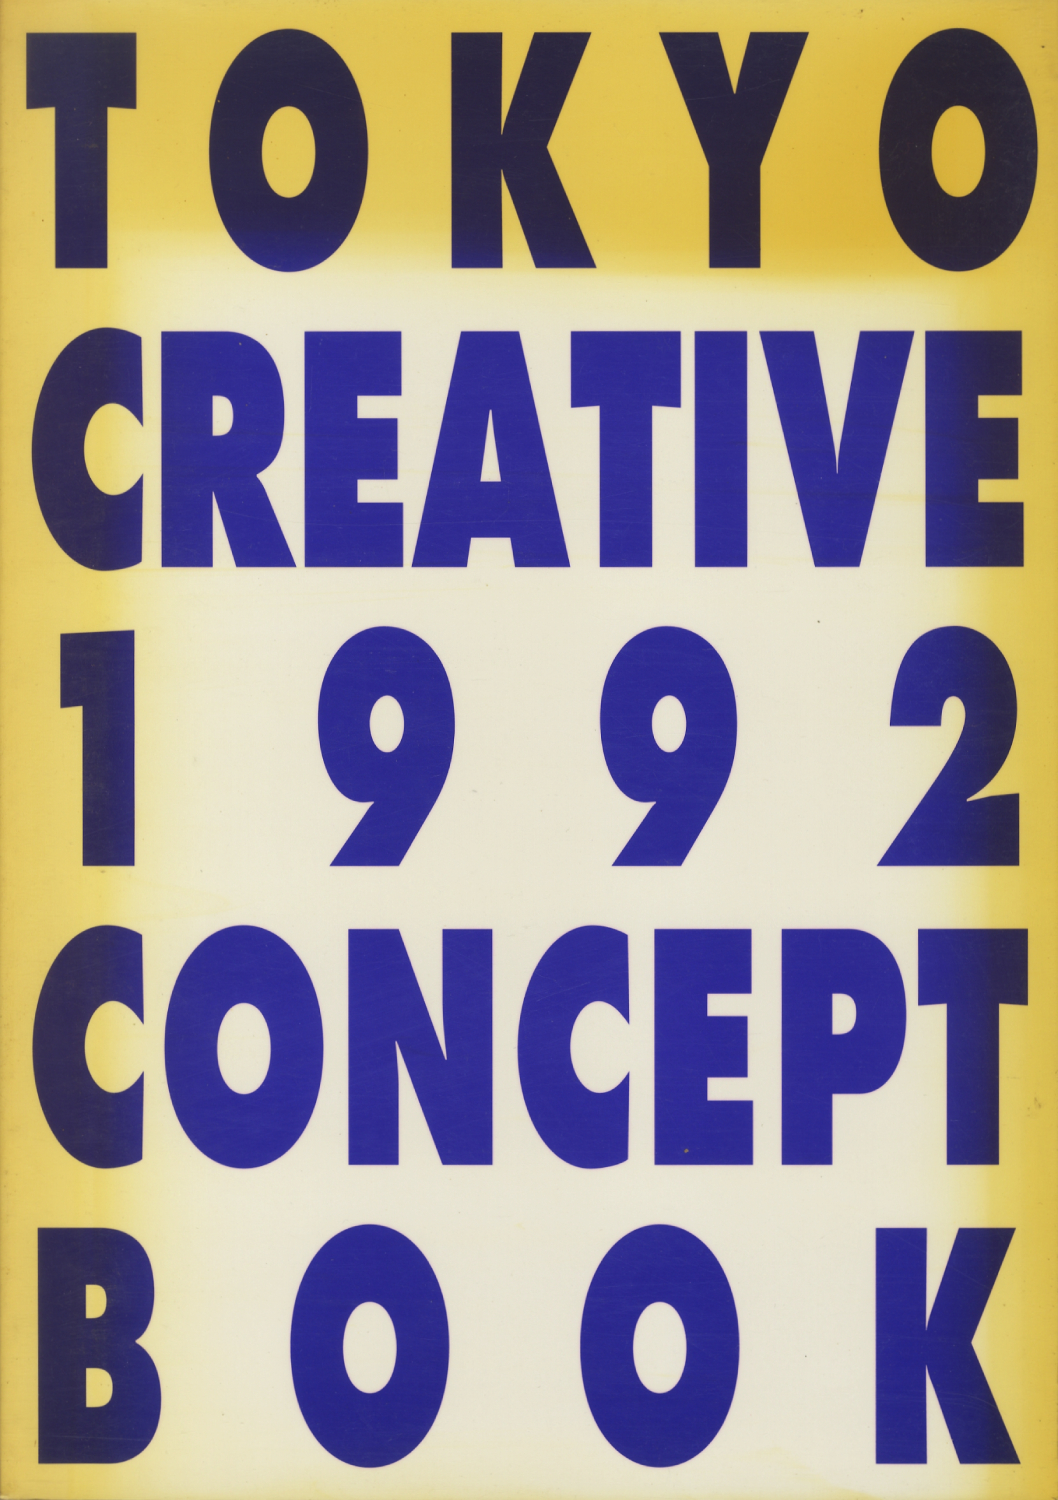 TOKYO CREATIVE 1992 CONCEPT BOOK　東京クリエイティブ’92コンセプトブック